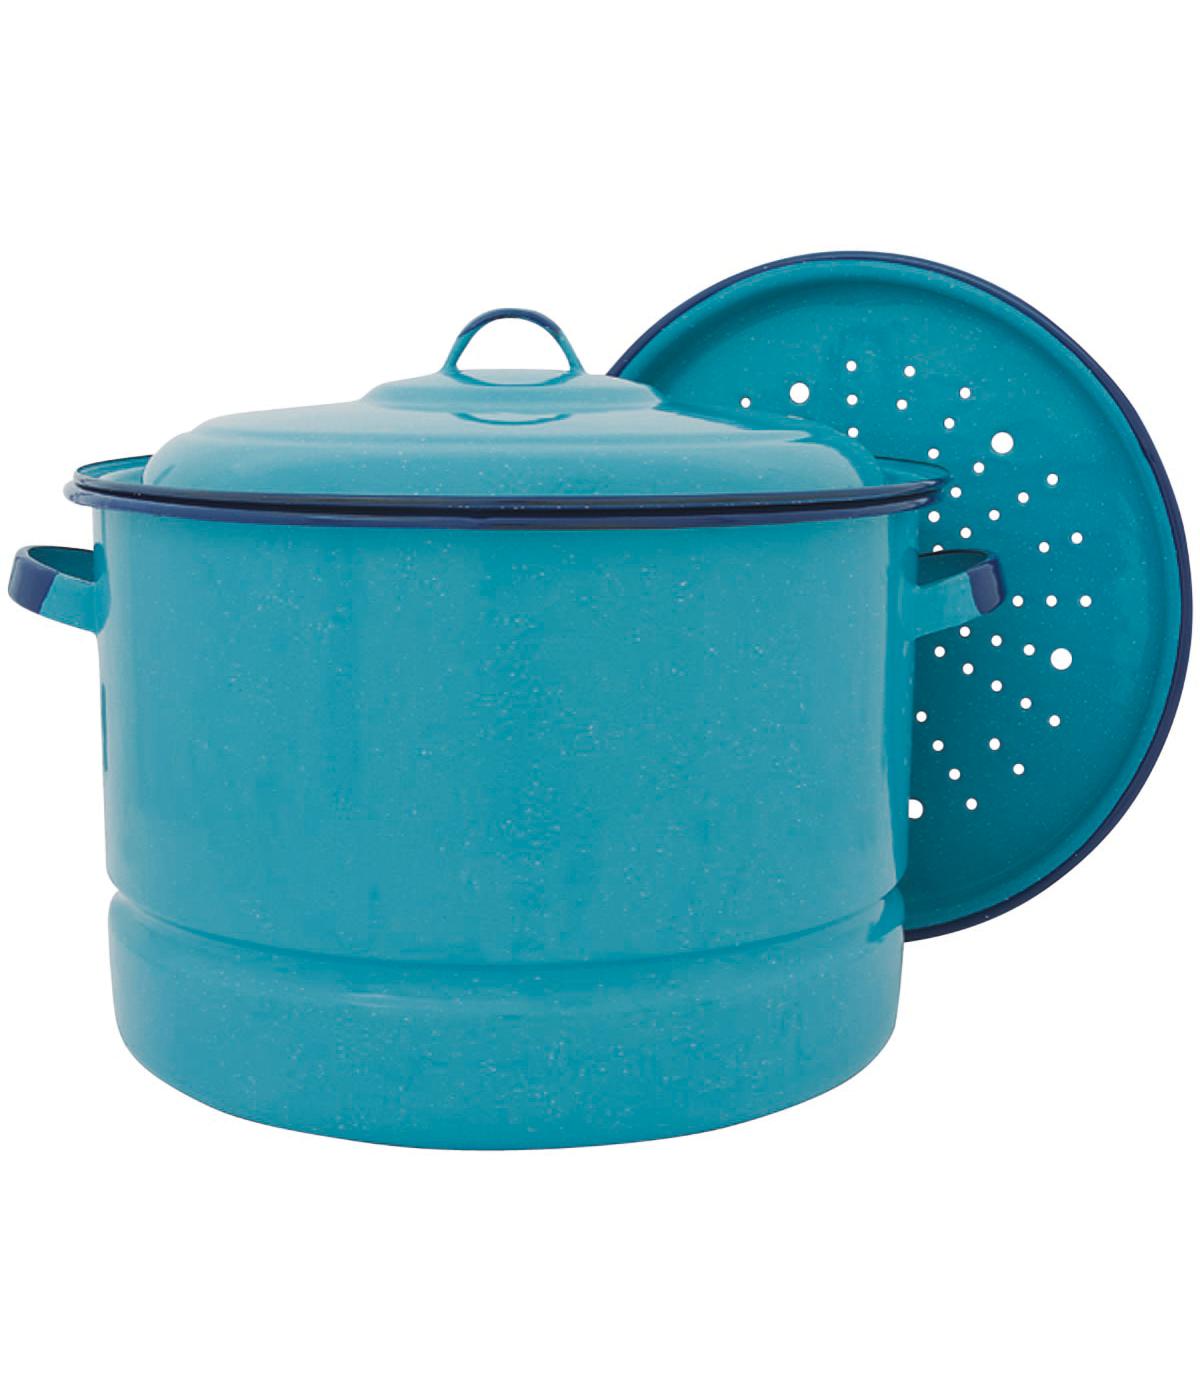 Cinsa Turquoise Blue Steamer Pot with Lid & Trivet; image 2 of 2